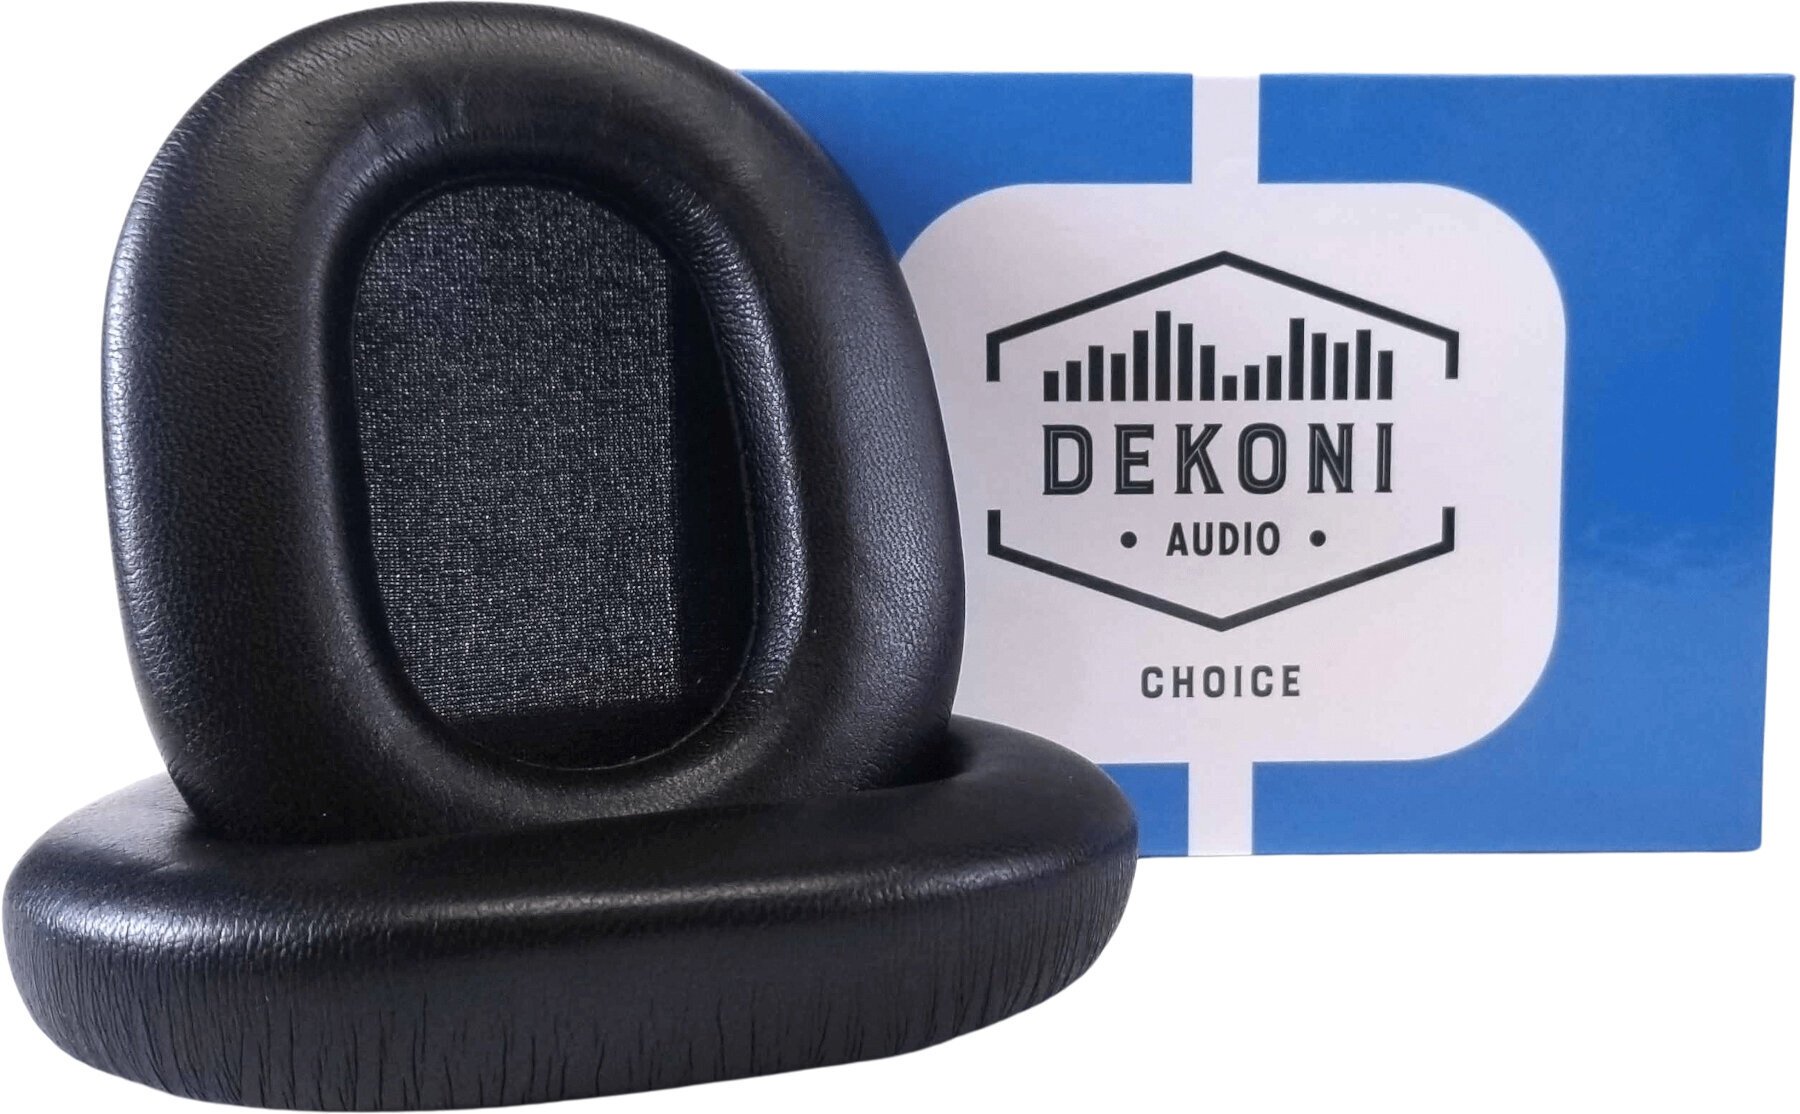 Ohrpolster für Kopfhörer Dekoni Audio EPZ-XM5-CHL Ohrpolster für Kopfhörer Schwarz